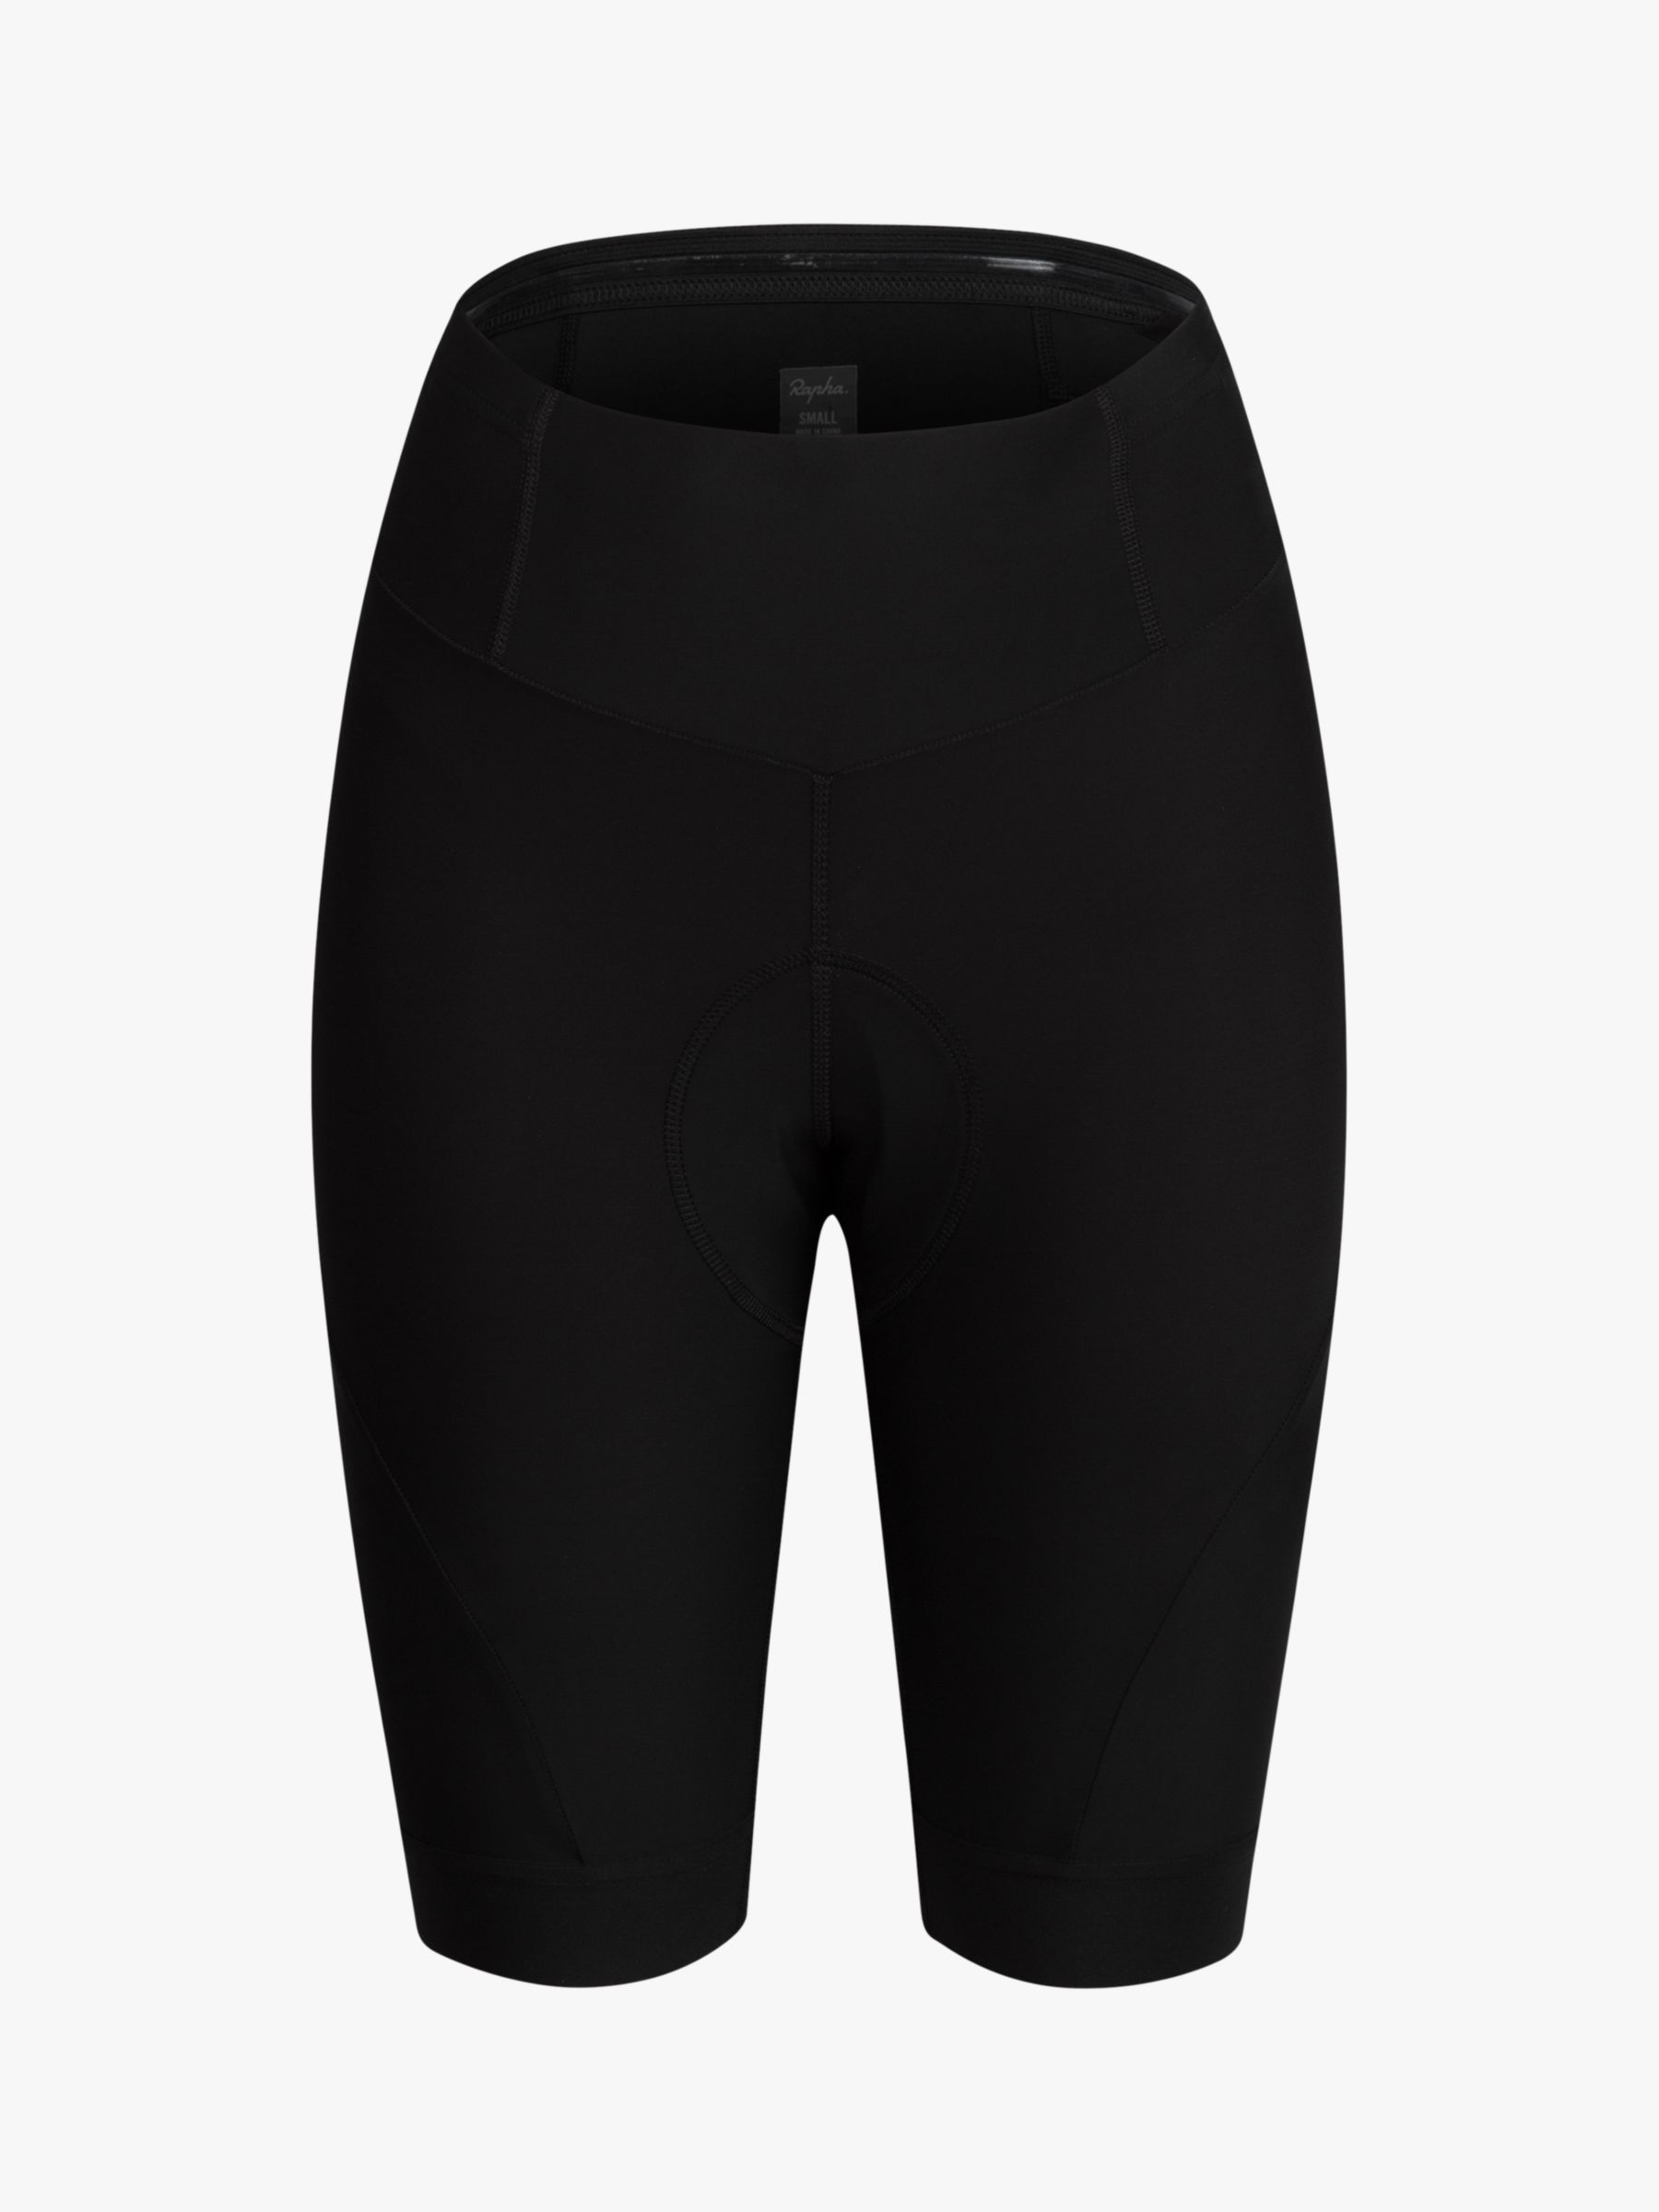 Rapha Core Cycling Shorts, Basic Black, S